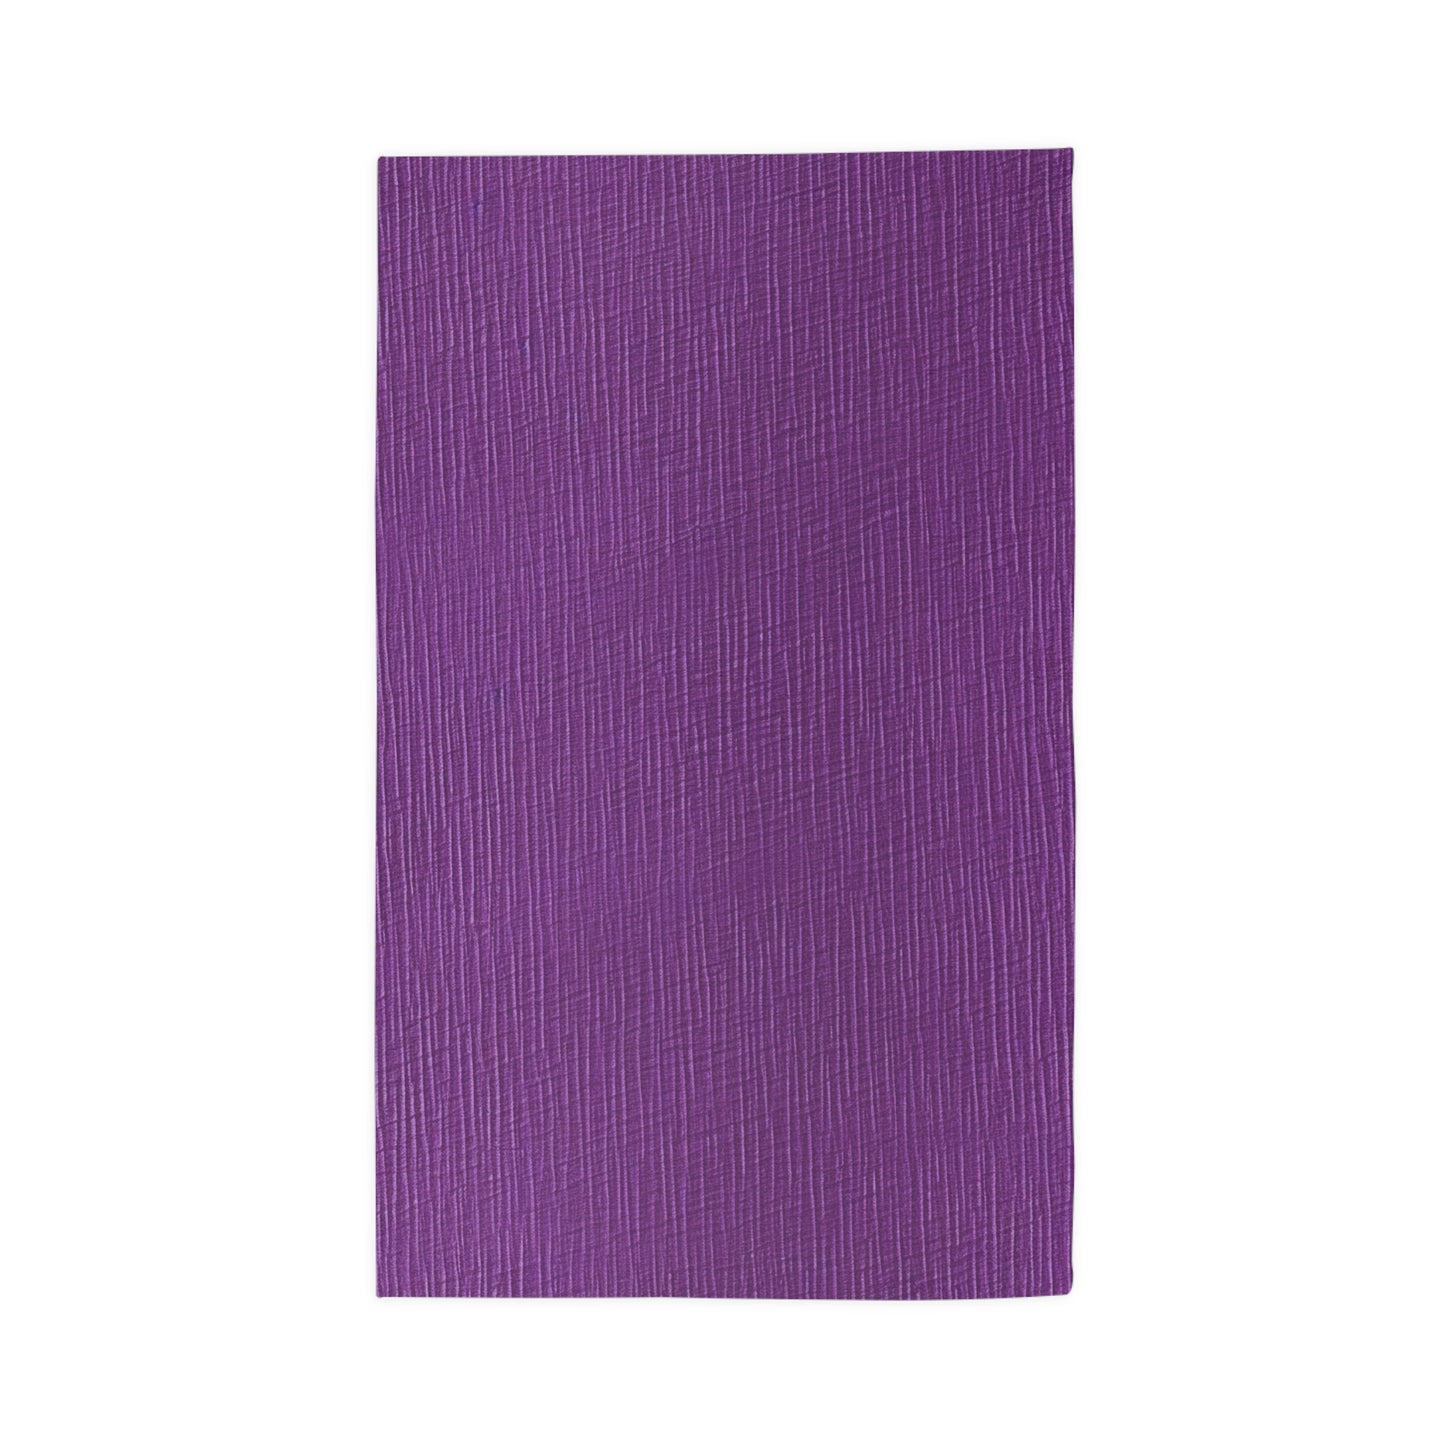 Violet/Plum/Purple: Denim-Inspired Luxurious Fabric - Dobby Rug